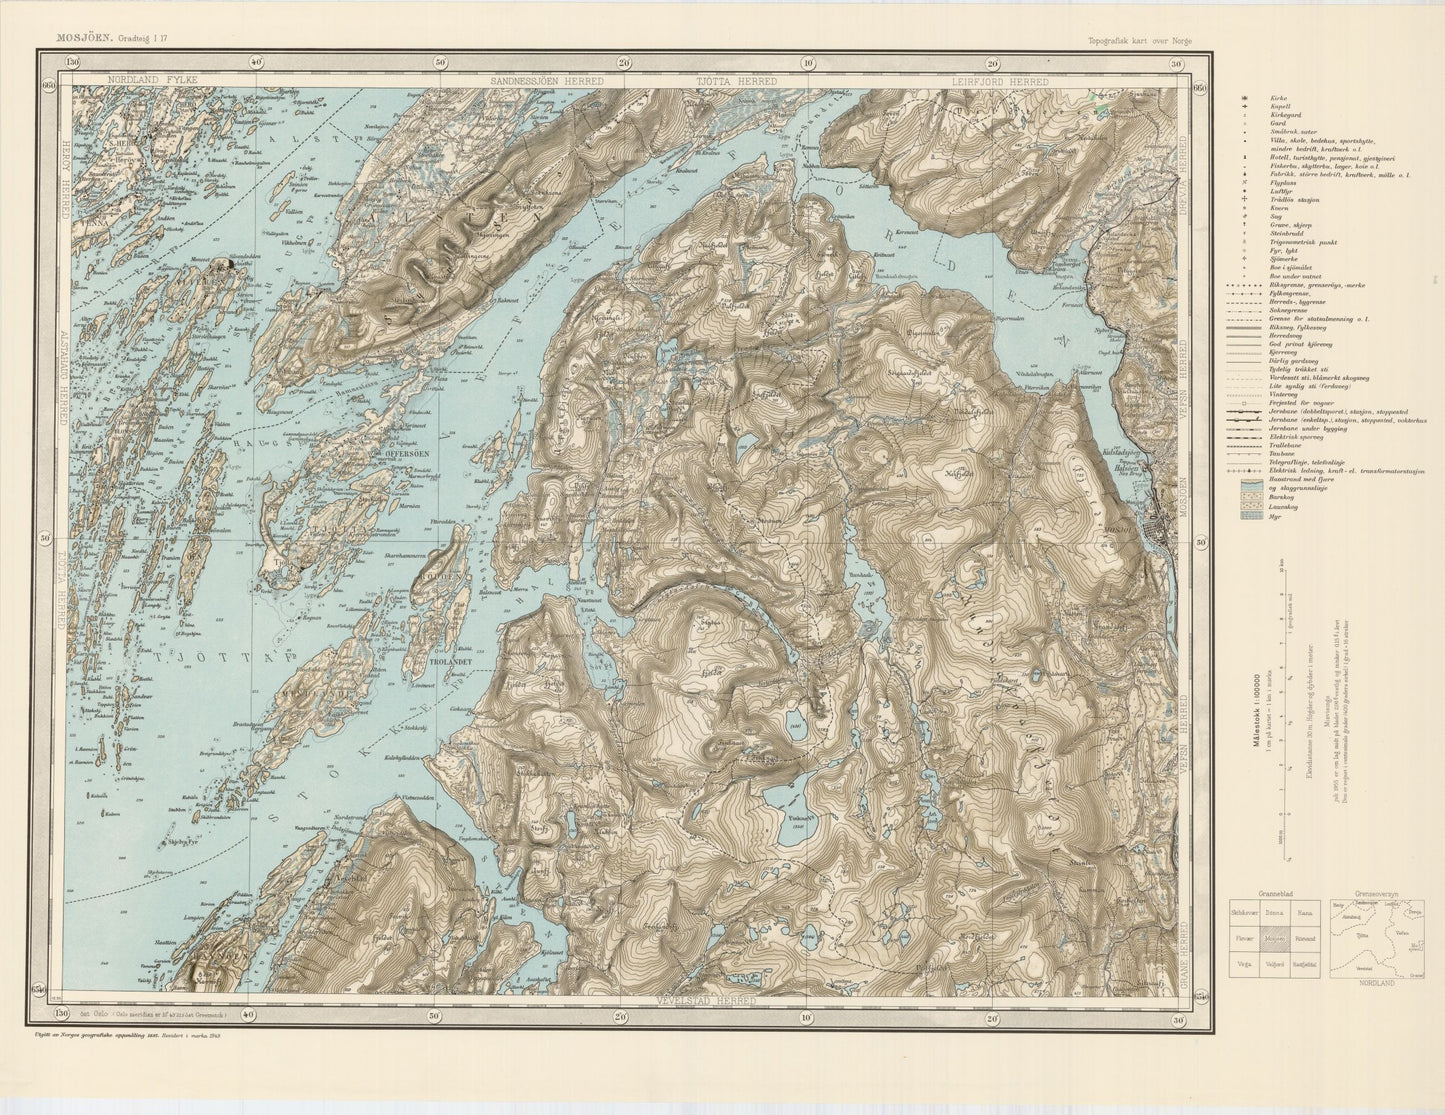 I17 Mosjøen: Nordland